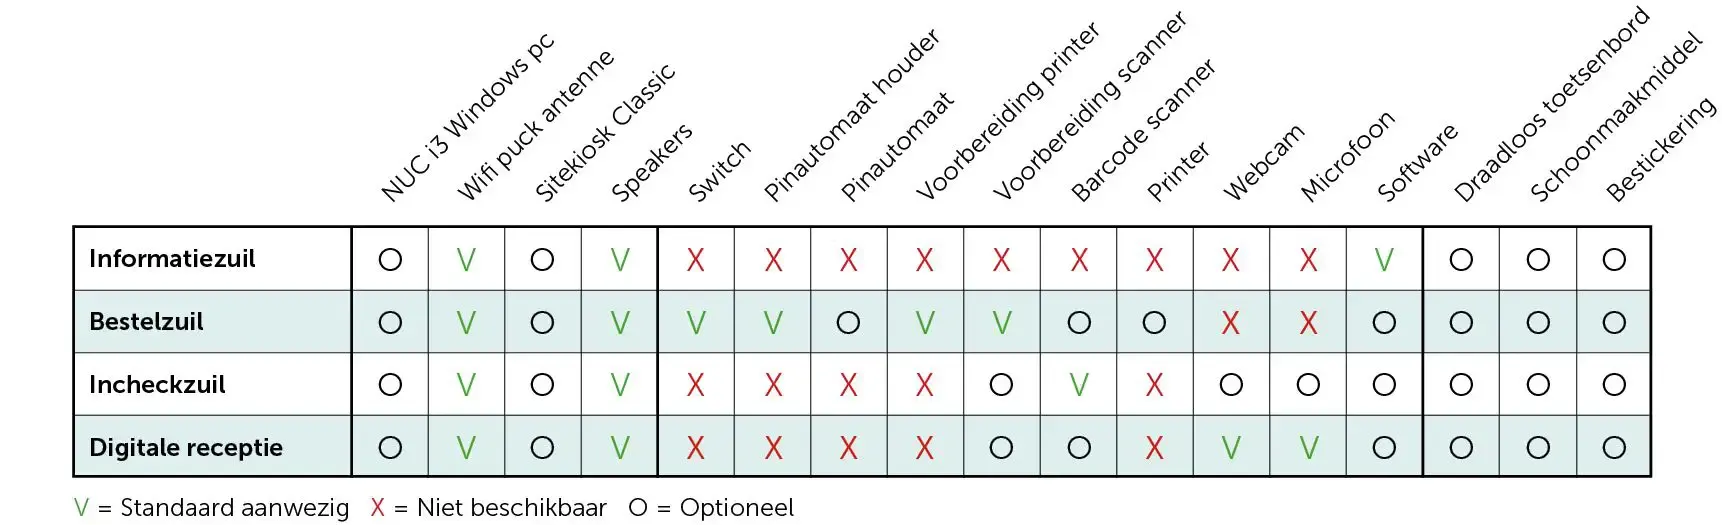 tabel opties evolution zuil